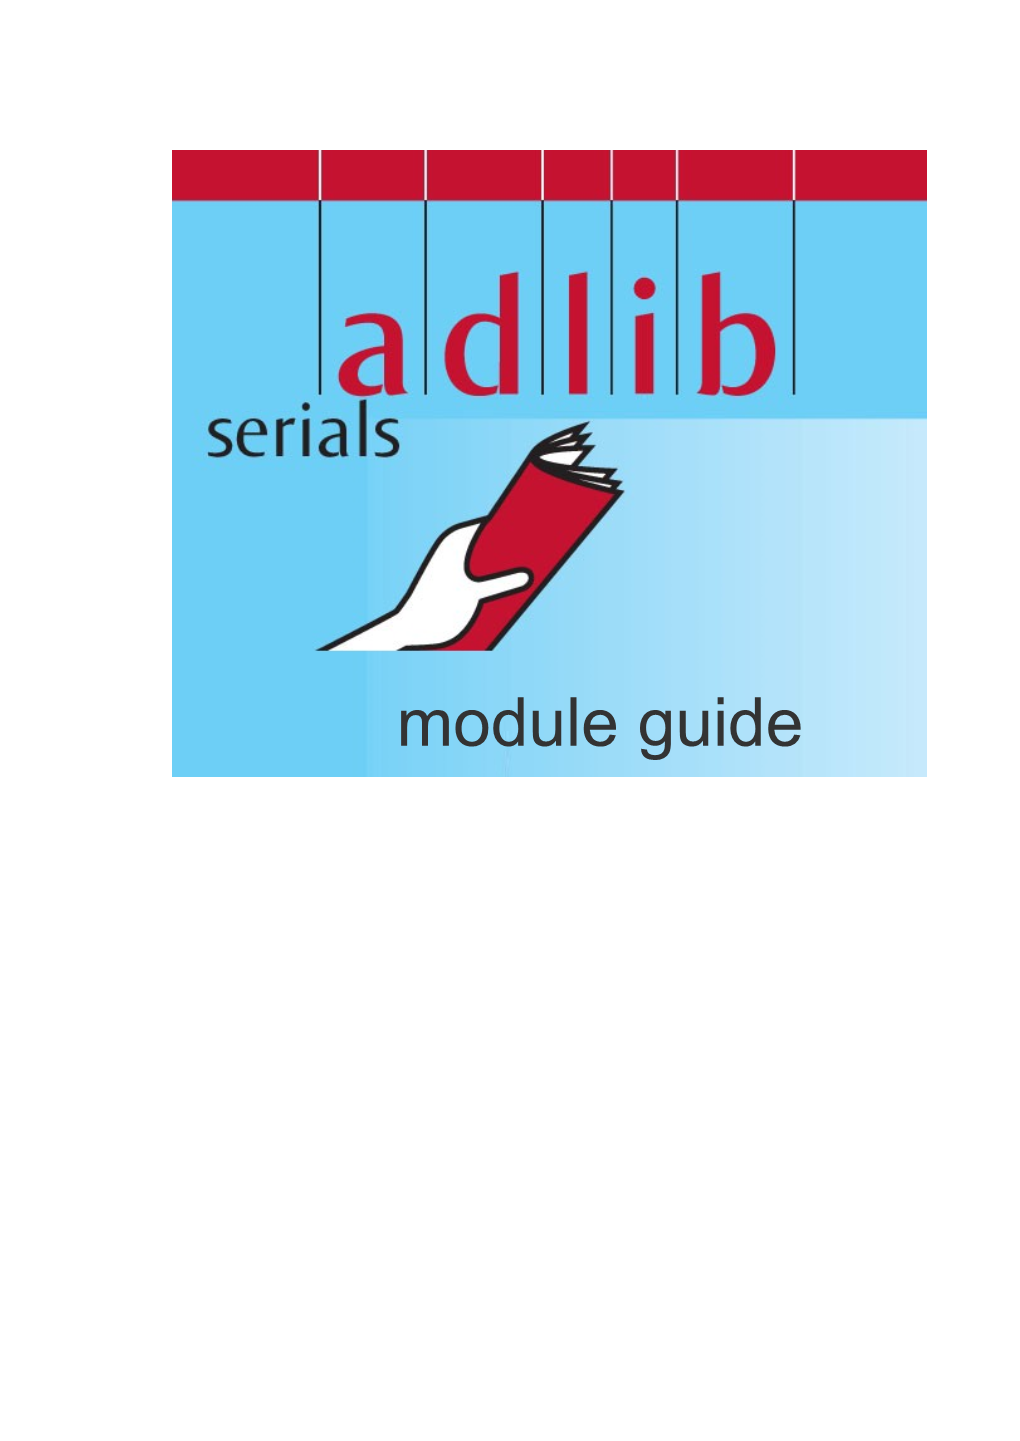 ADLIB Information Systems